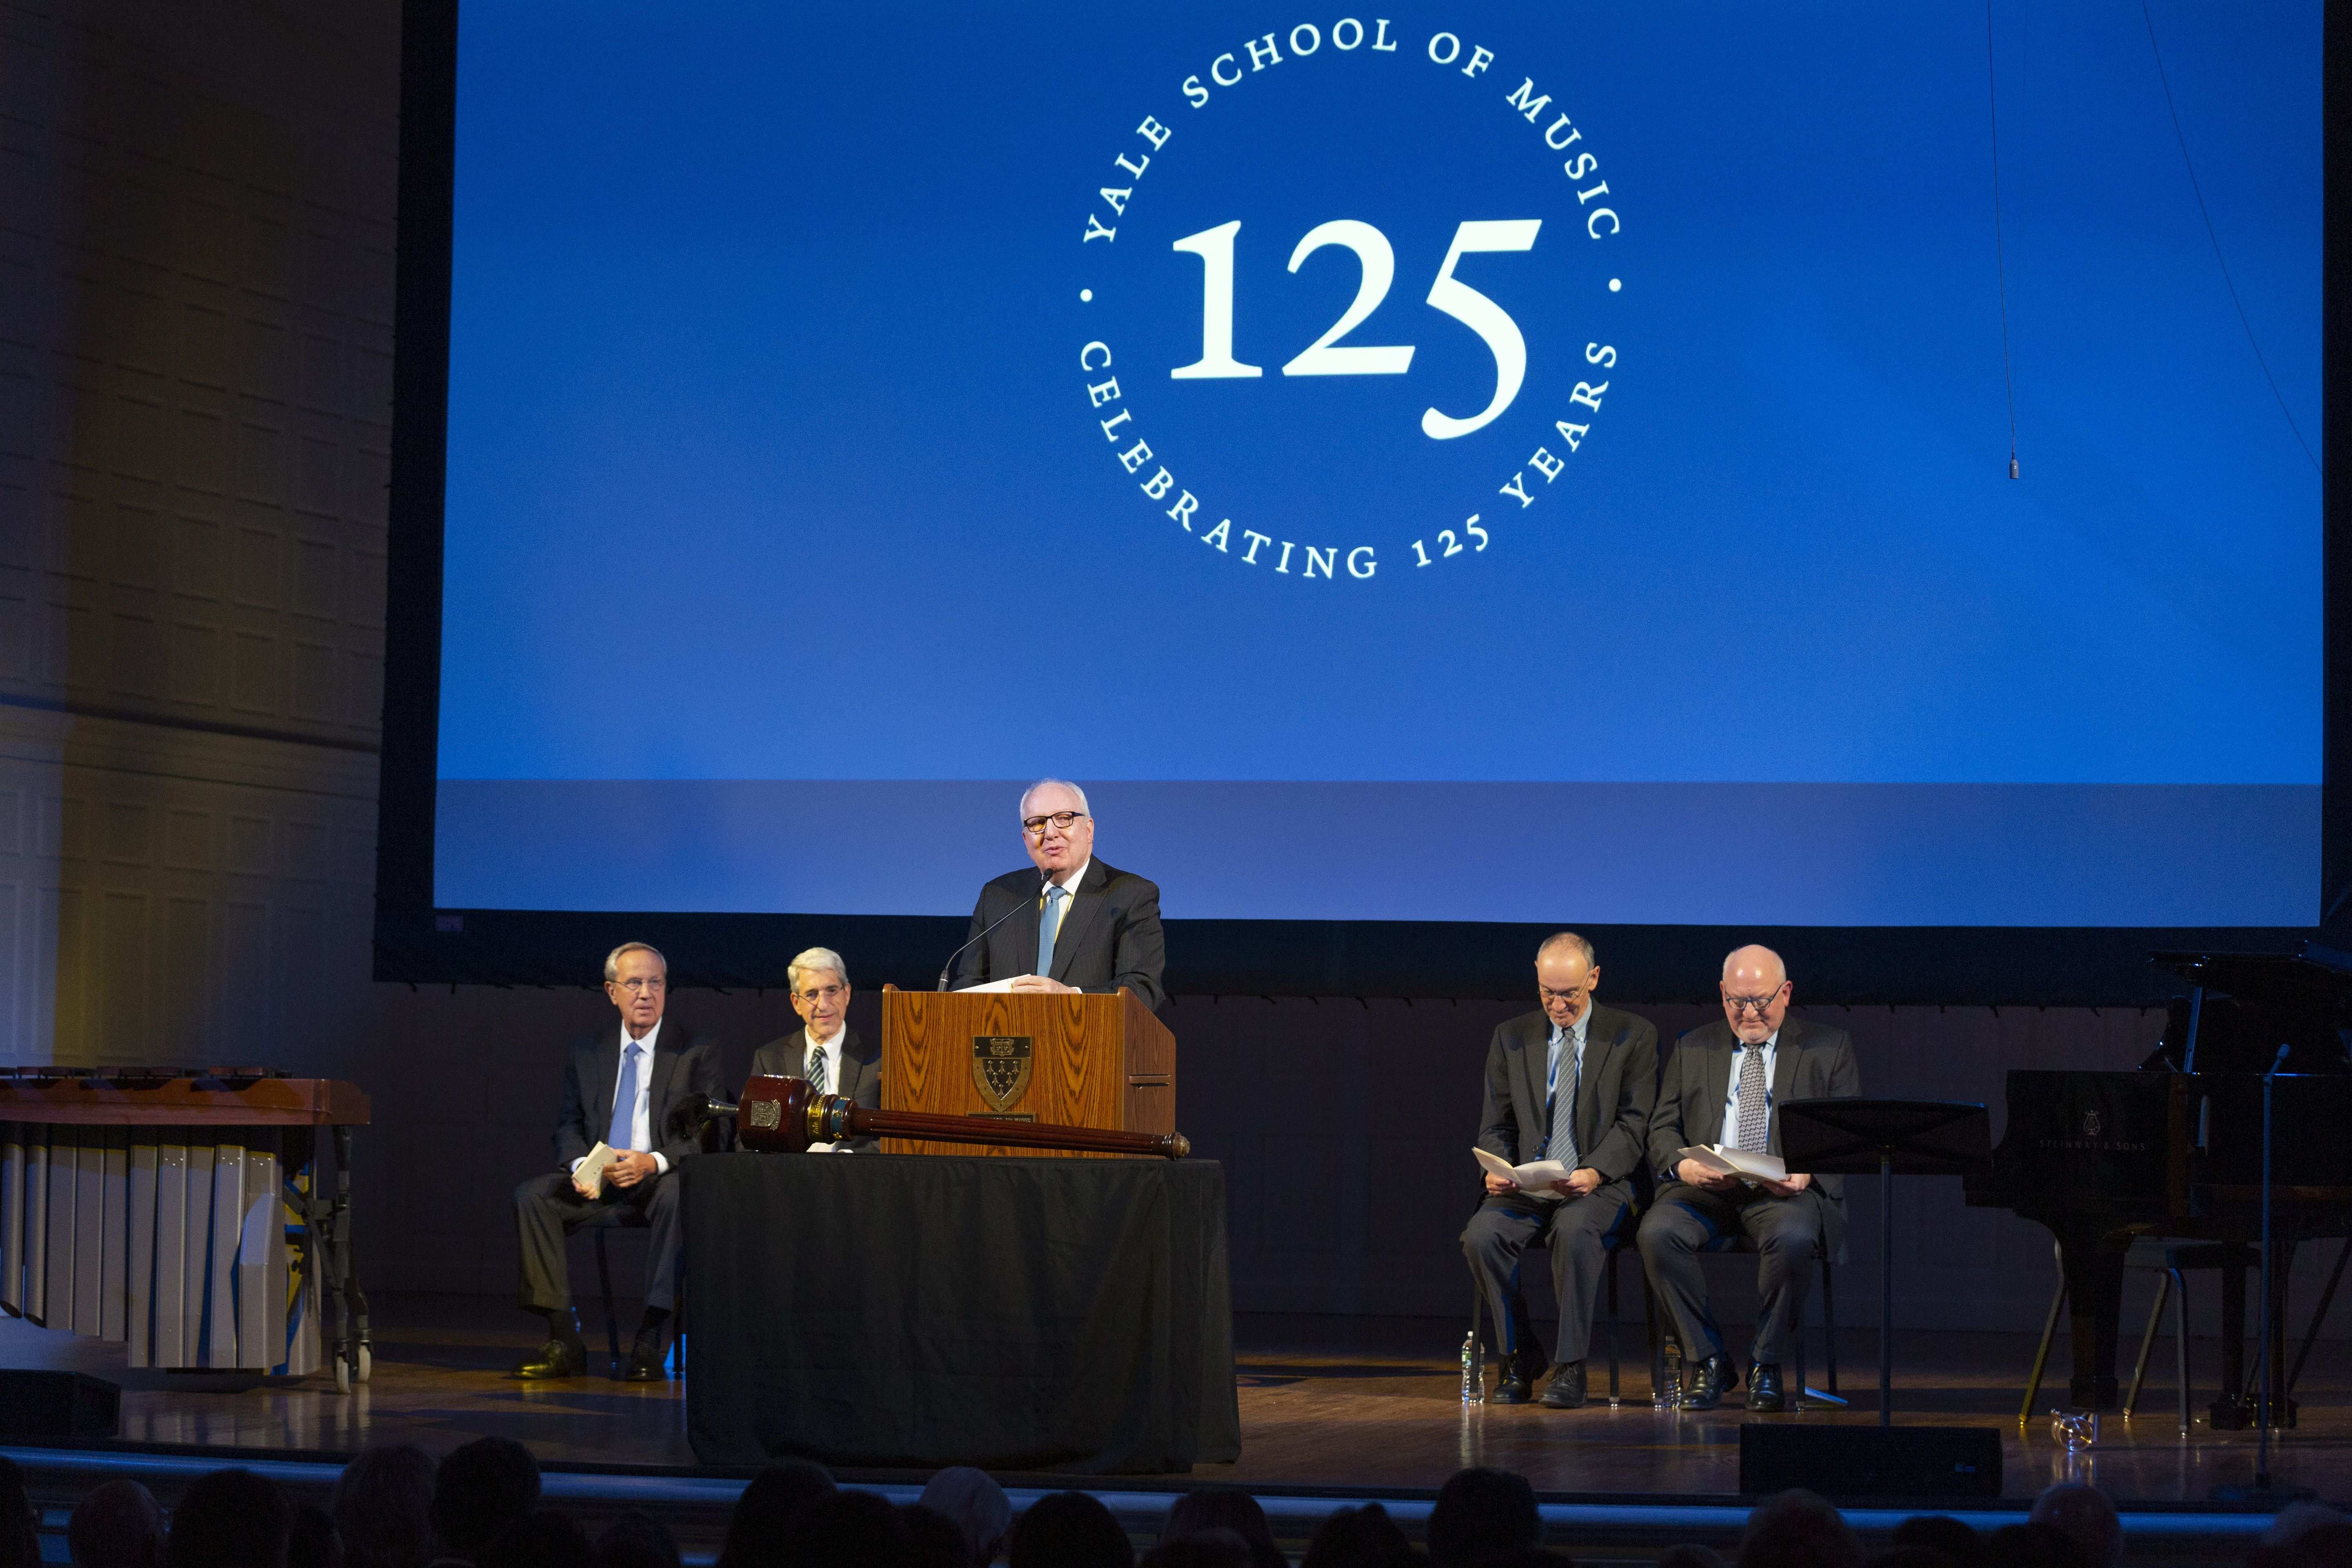 Dean Robert Blocker speaks at the 2019 Convocation ceremony